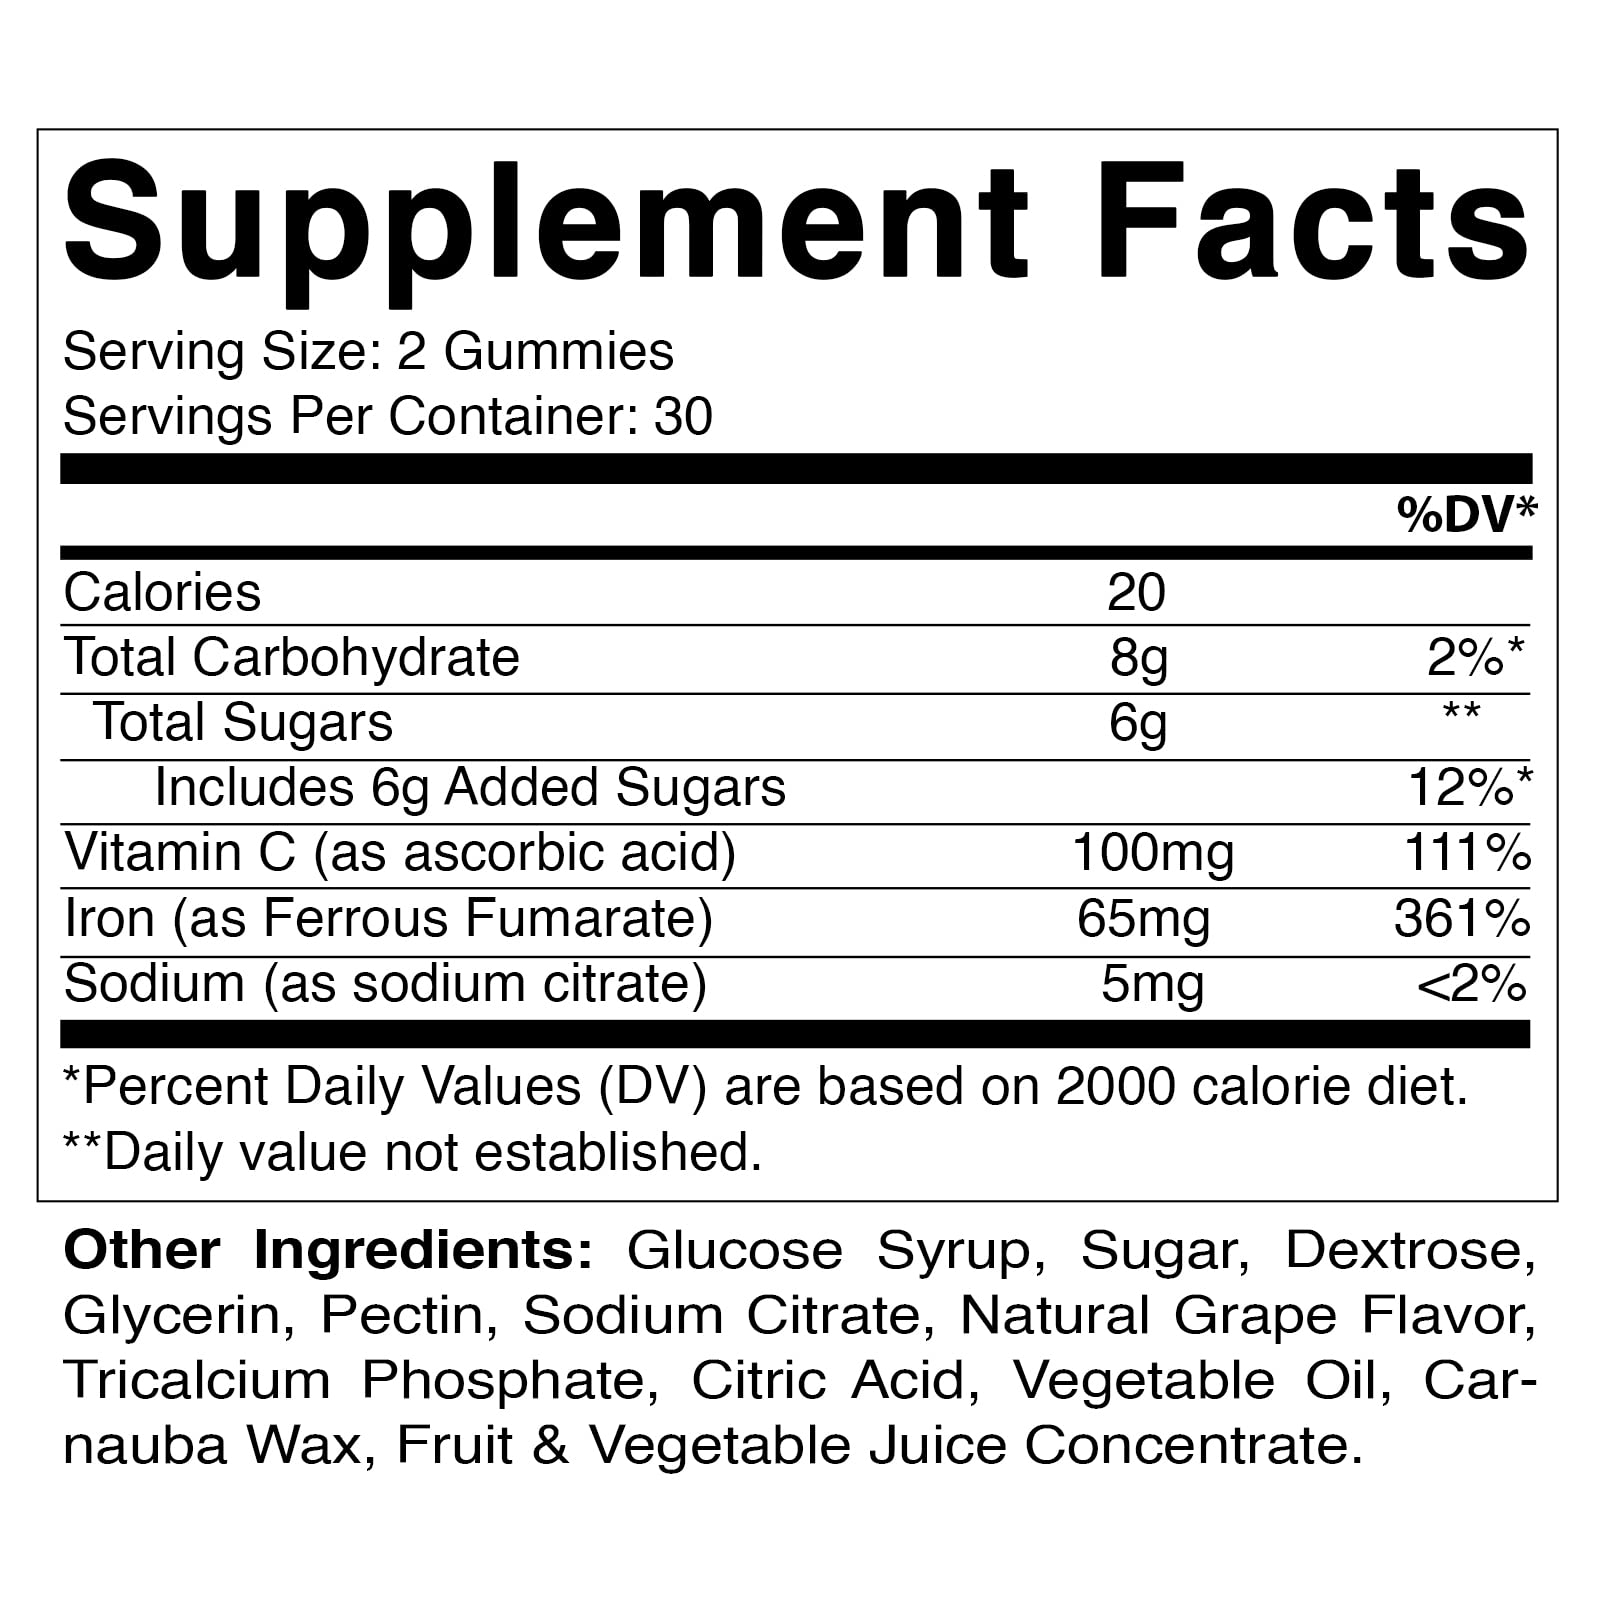 Vitamatic Iron 65 mg Gummies Supplement for Women & Men - 60 Vegan Gummies - Great Tasting Iron Gummy Vitamins with Vitamin C (1)